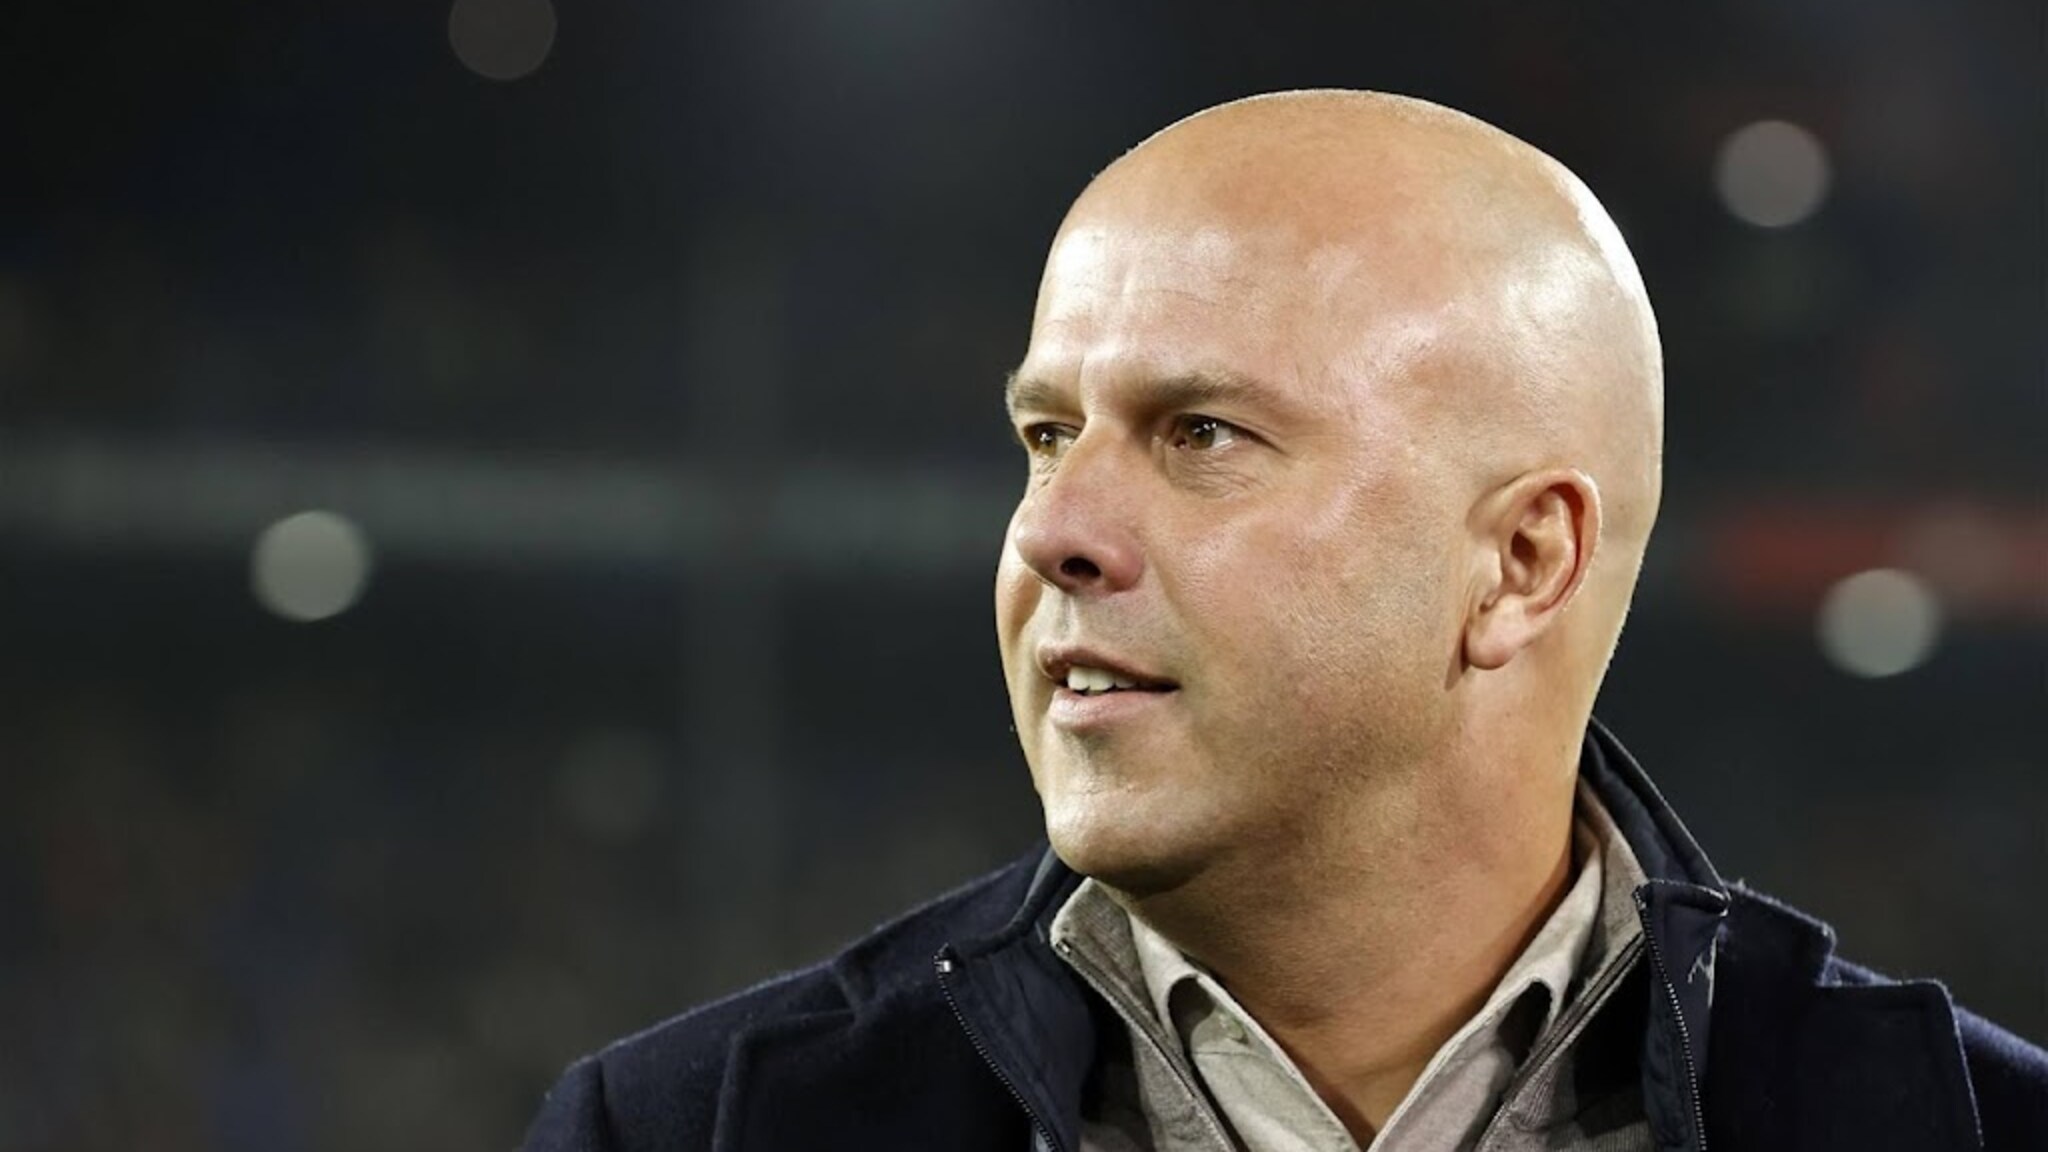 Trainer Slot snapt dat Feyenoord aanvaller Dilrosun laat gaan